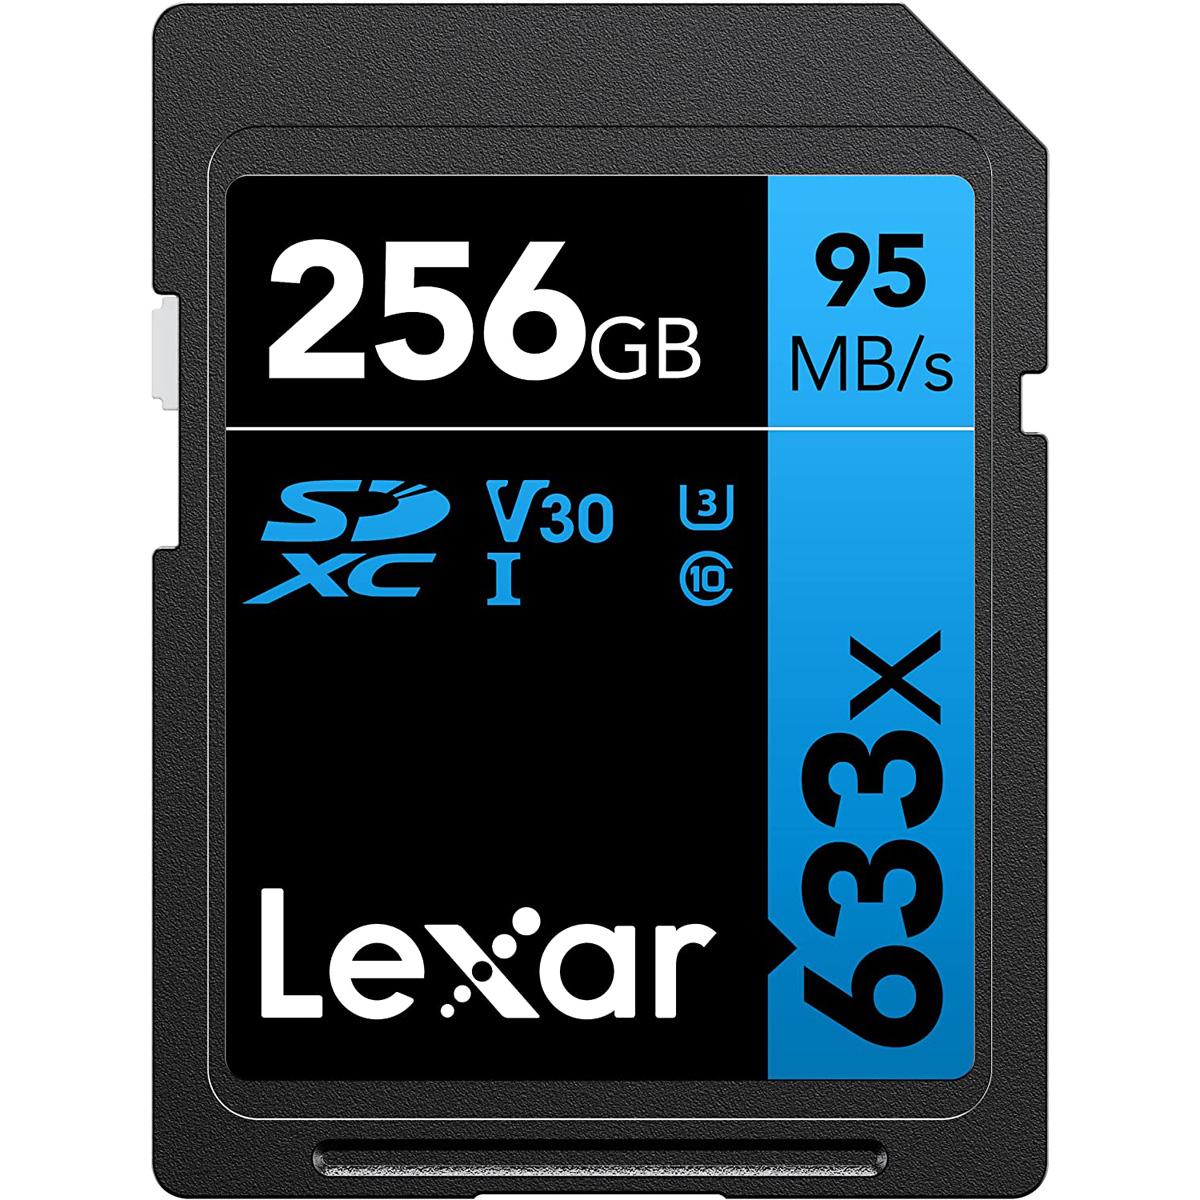 Lexar Professional 633x 256GB SDXC UHS-I Memory Card for $27.99 Shipped